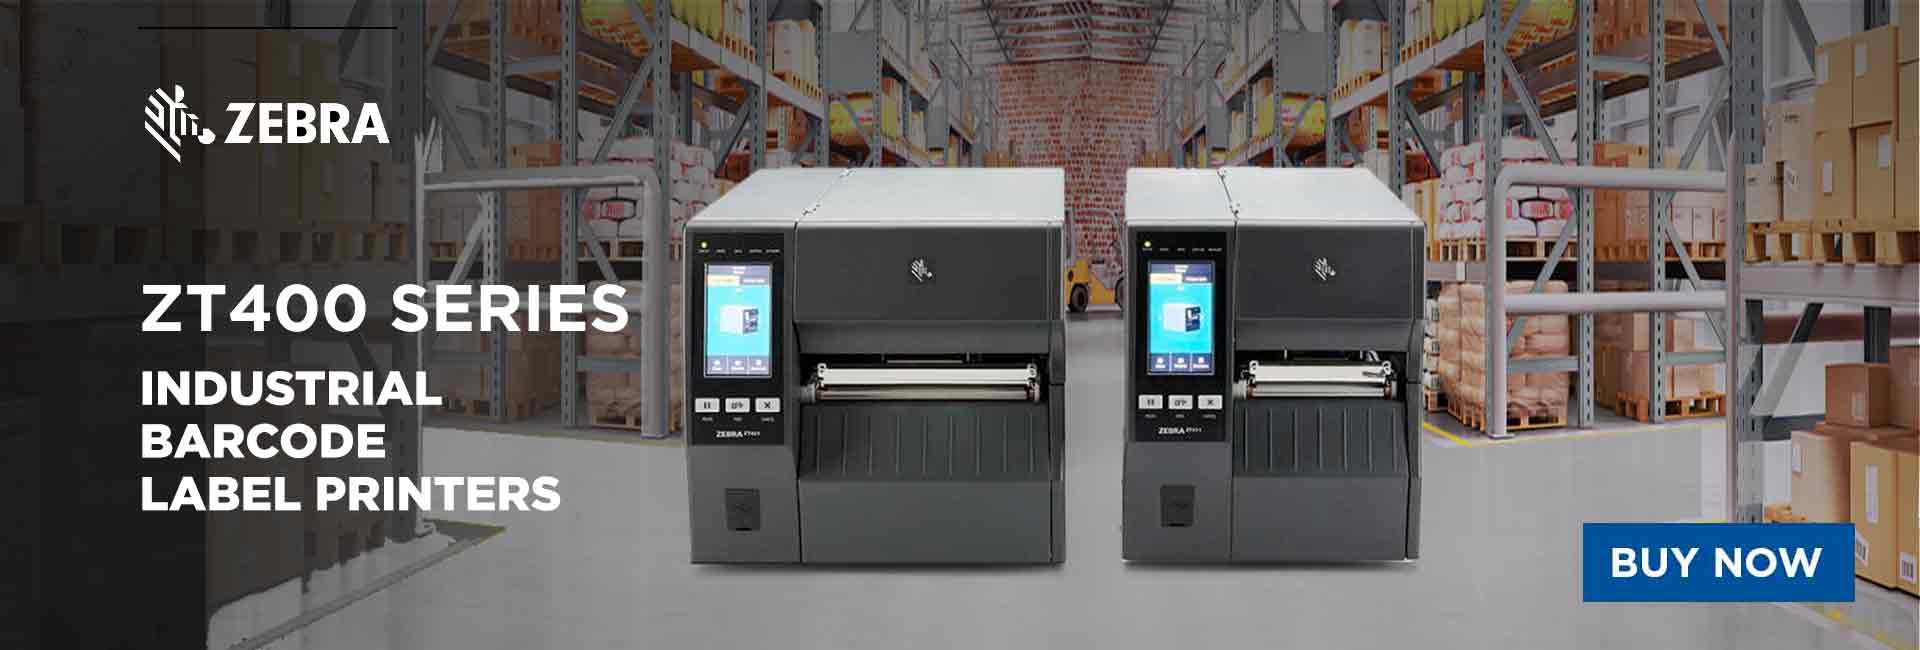 zebra label printer ZT400